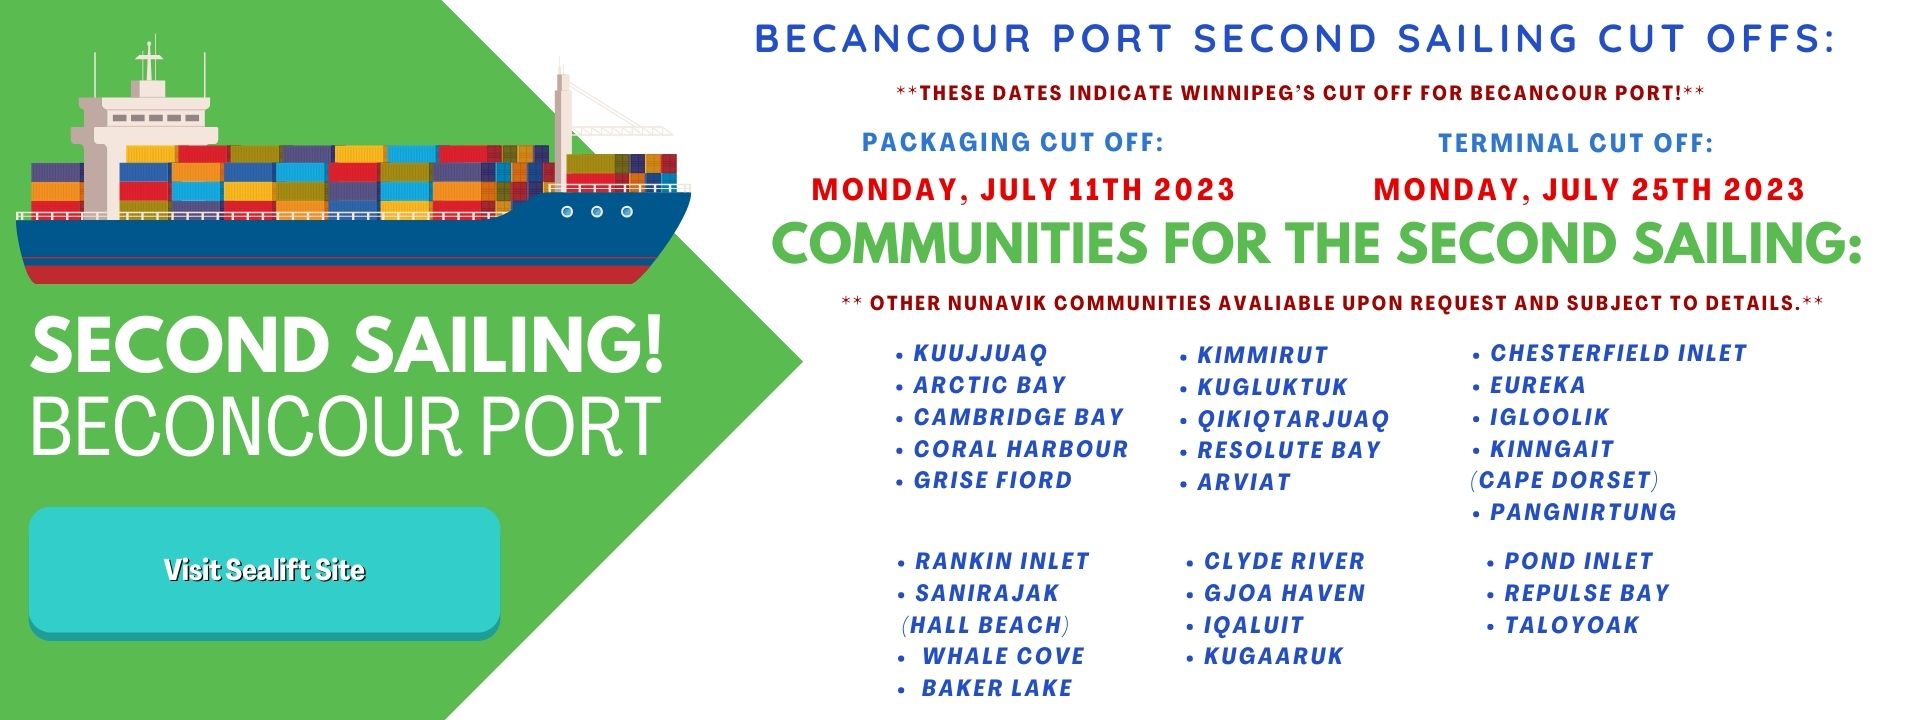 Second Sailing! Beconcour Port